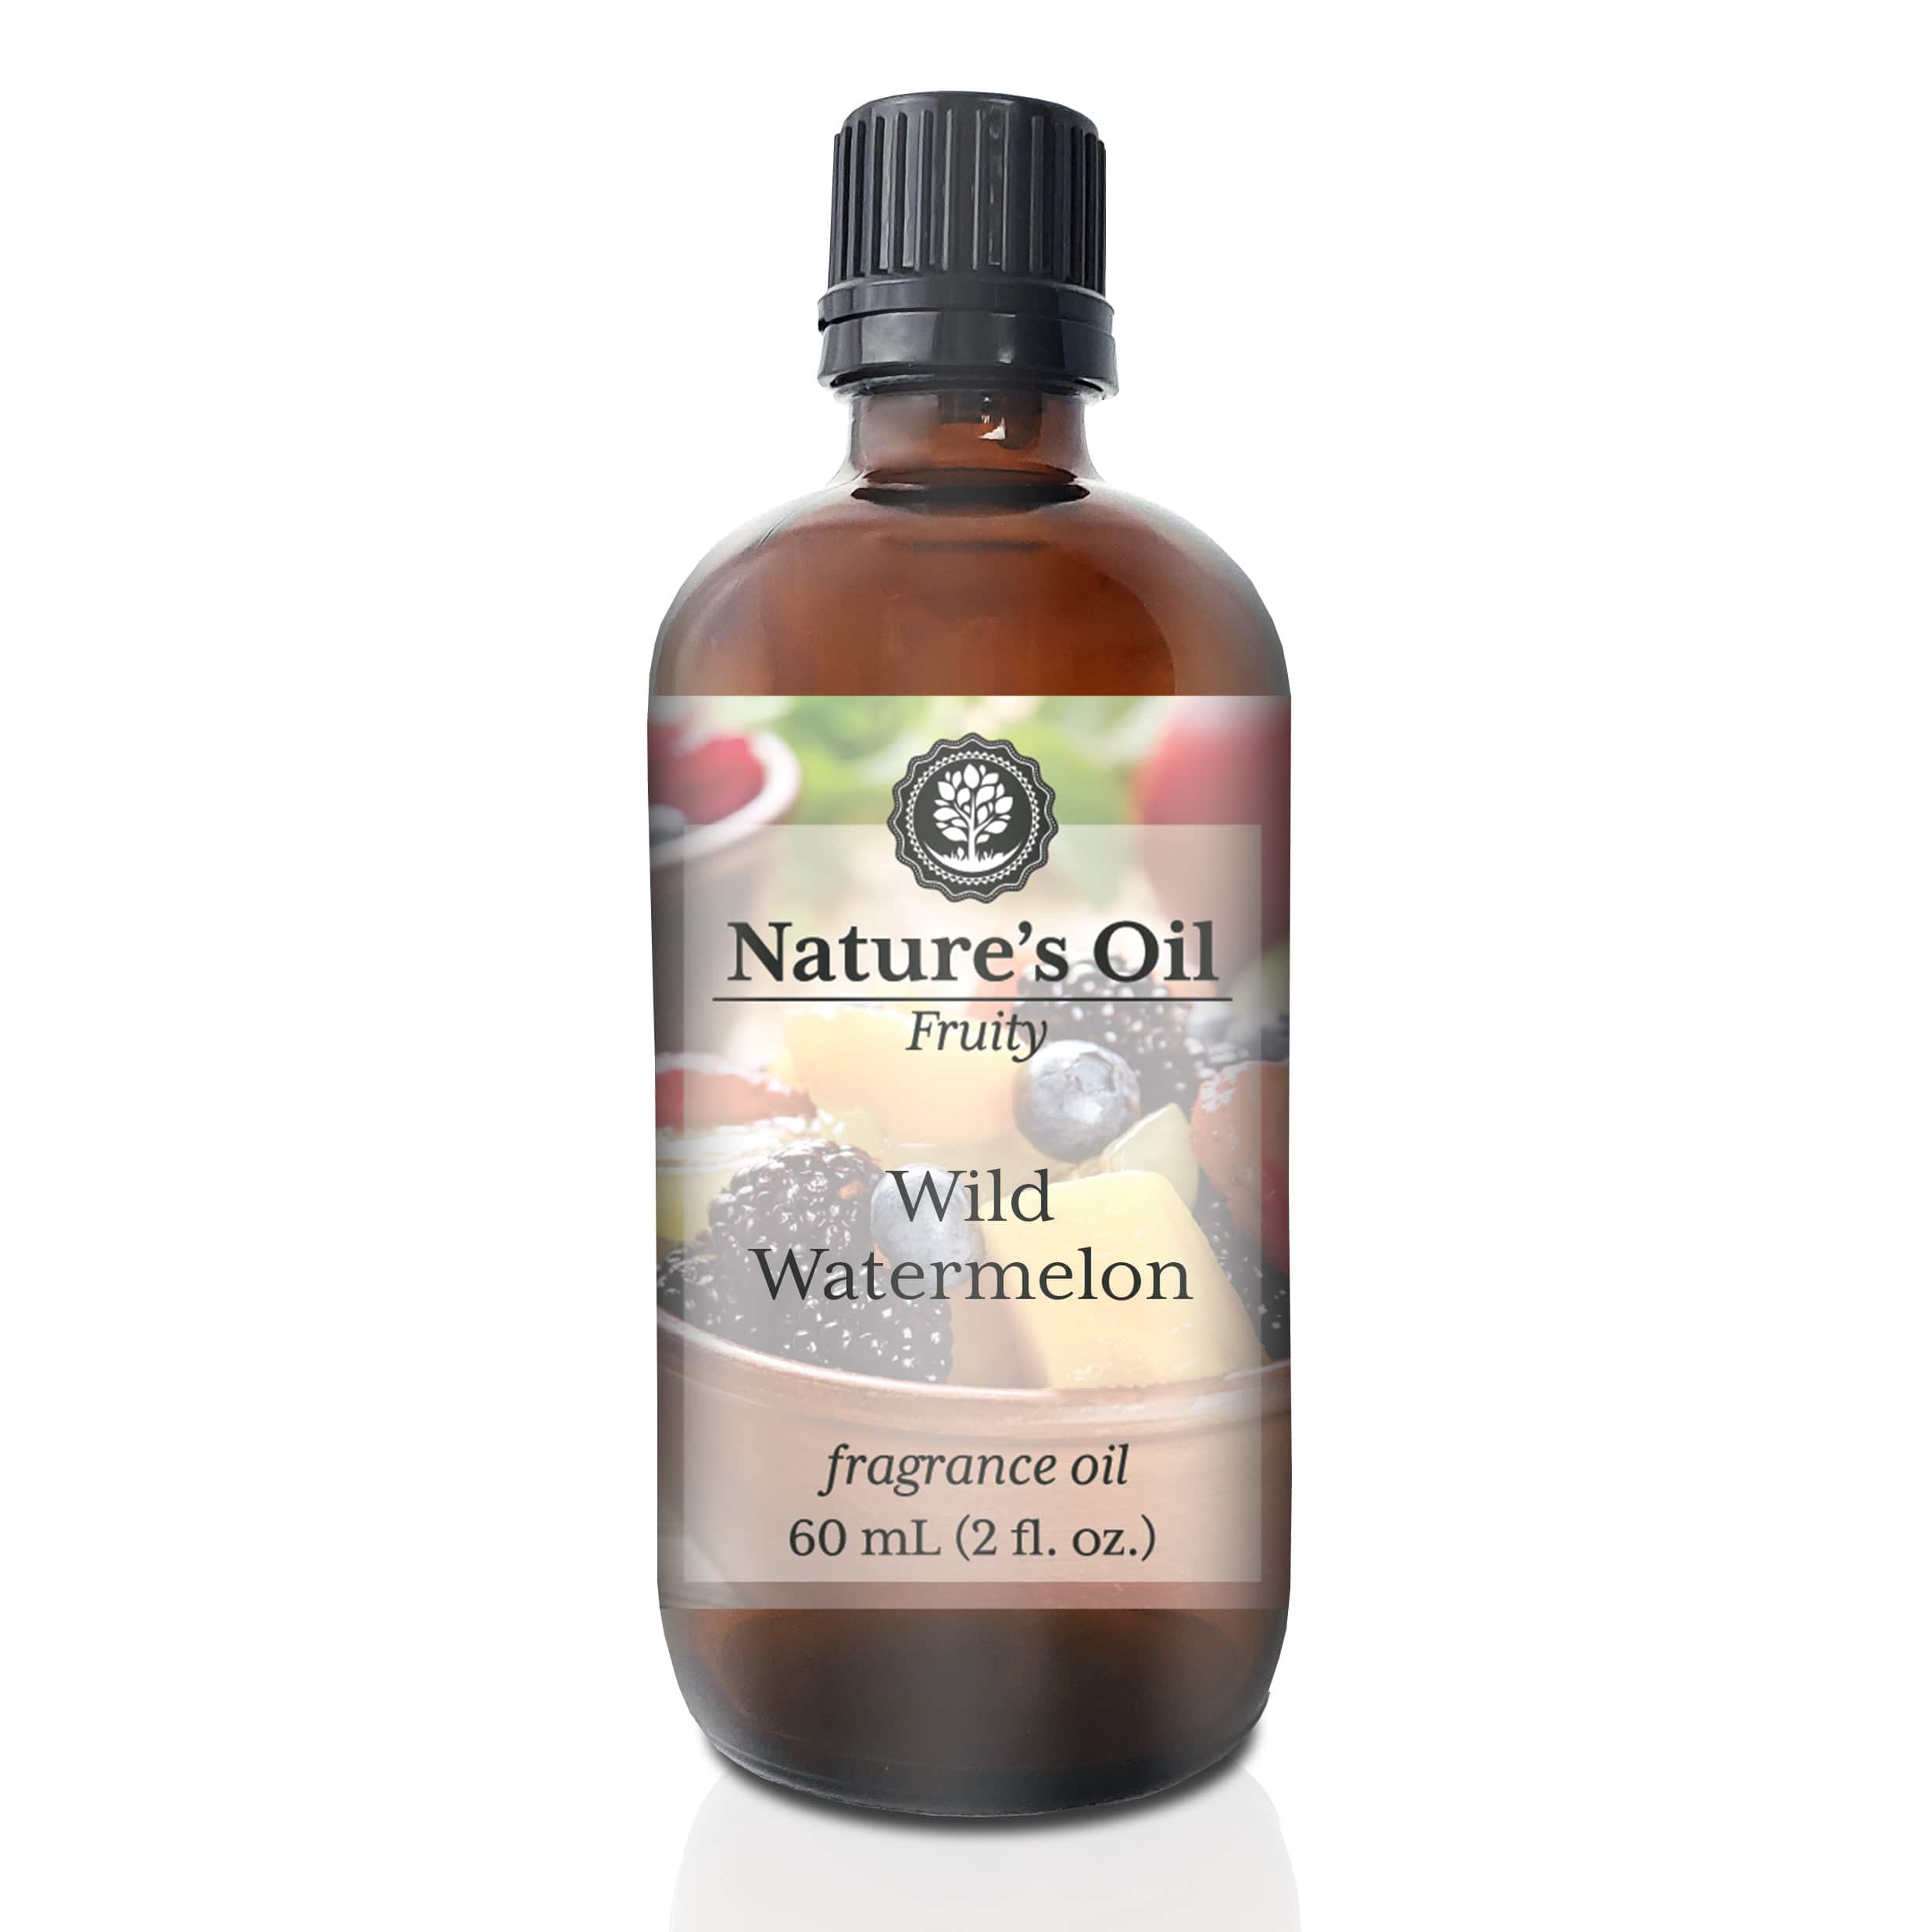 Nature's Oil Wild Watermelon Fragrance Oil